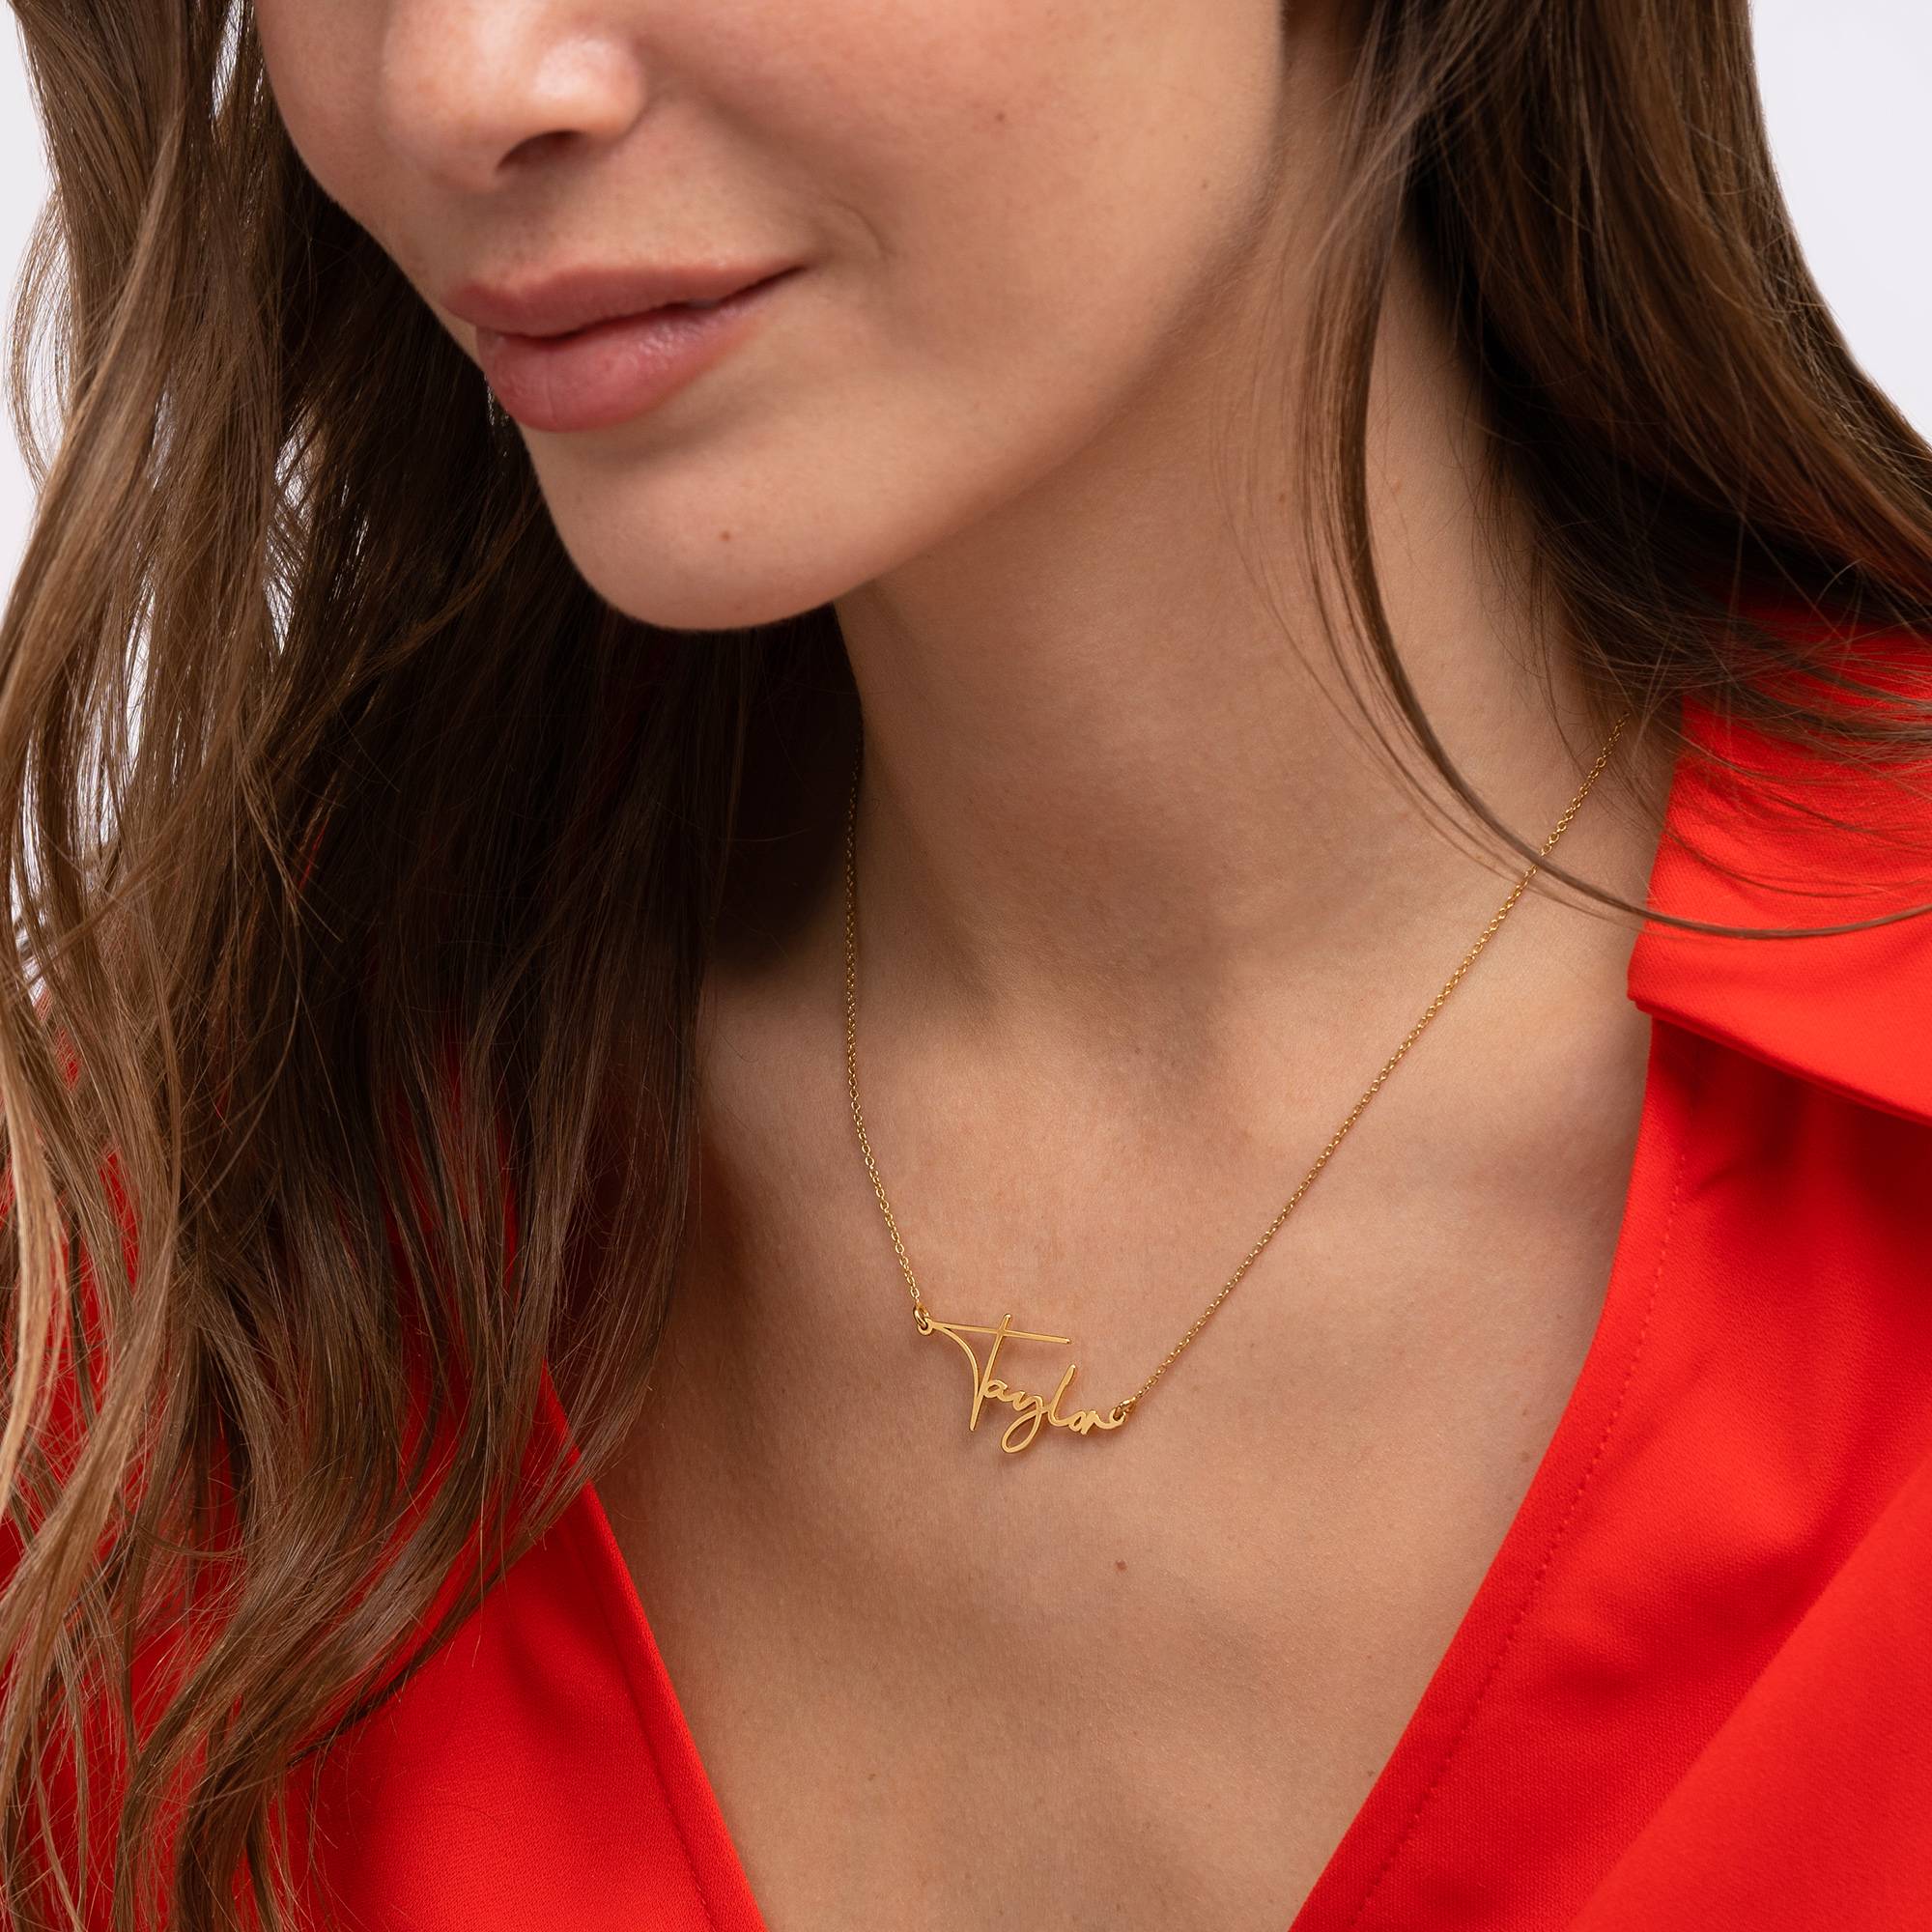 Paris Name Necklace in Gold Vermeil-4 product photo